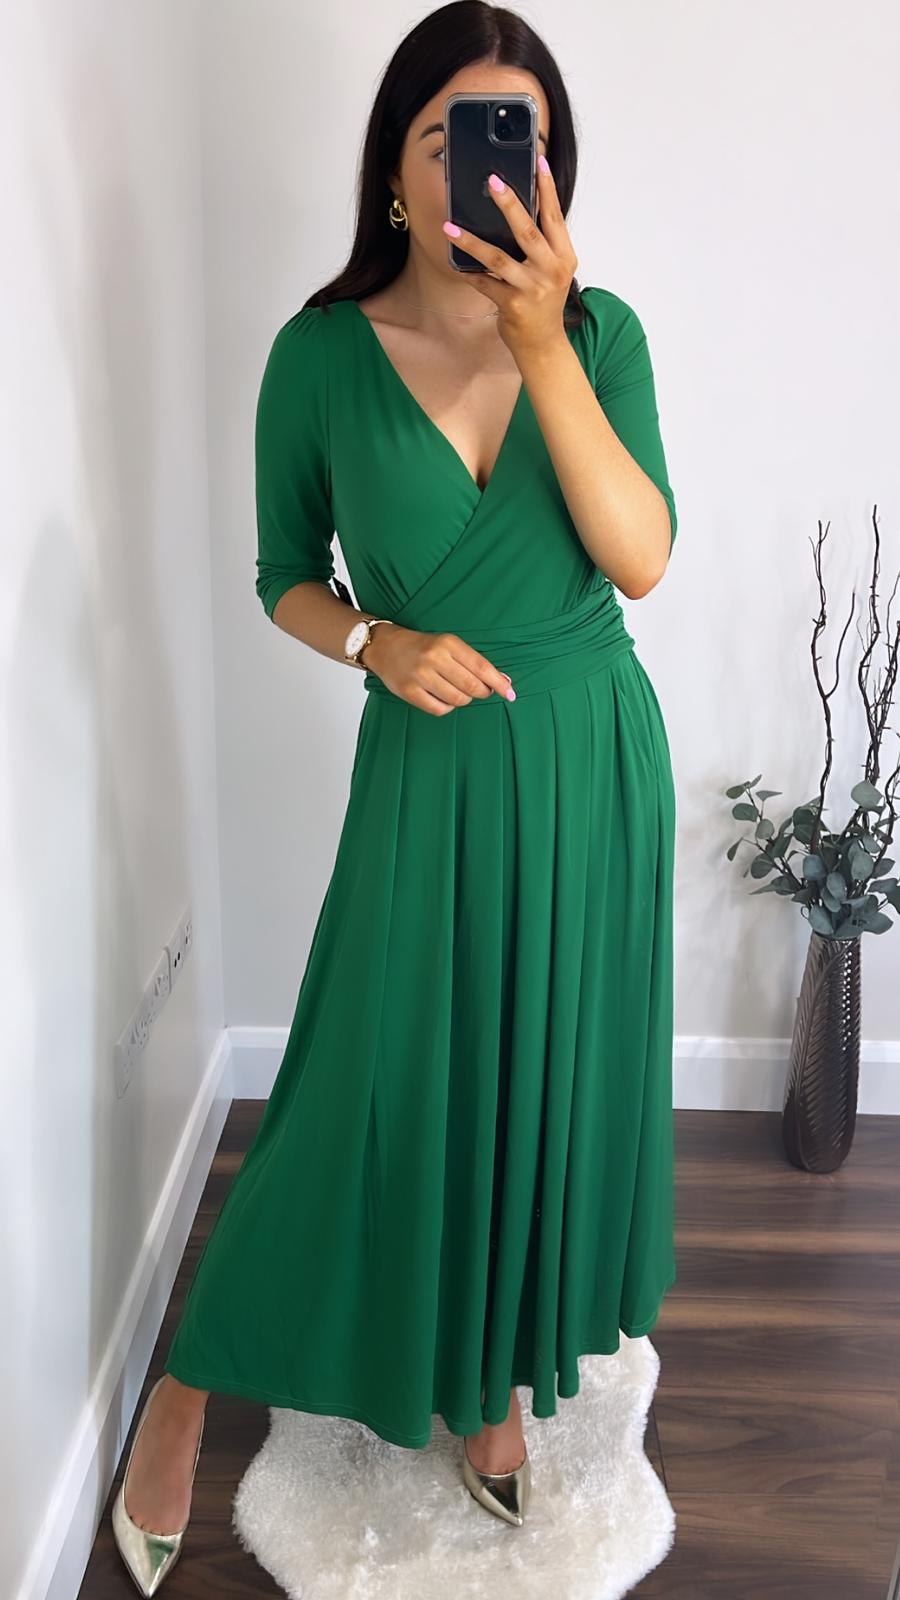 KELLY GREEN DRESS